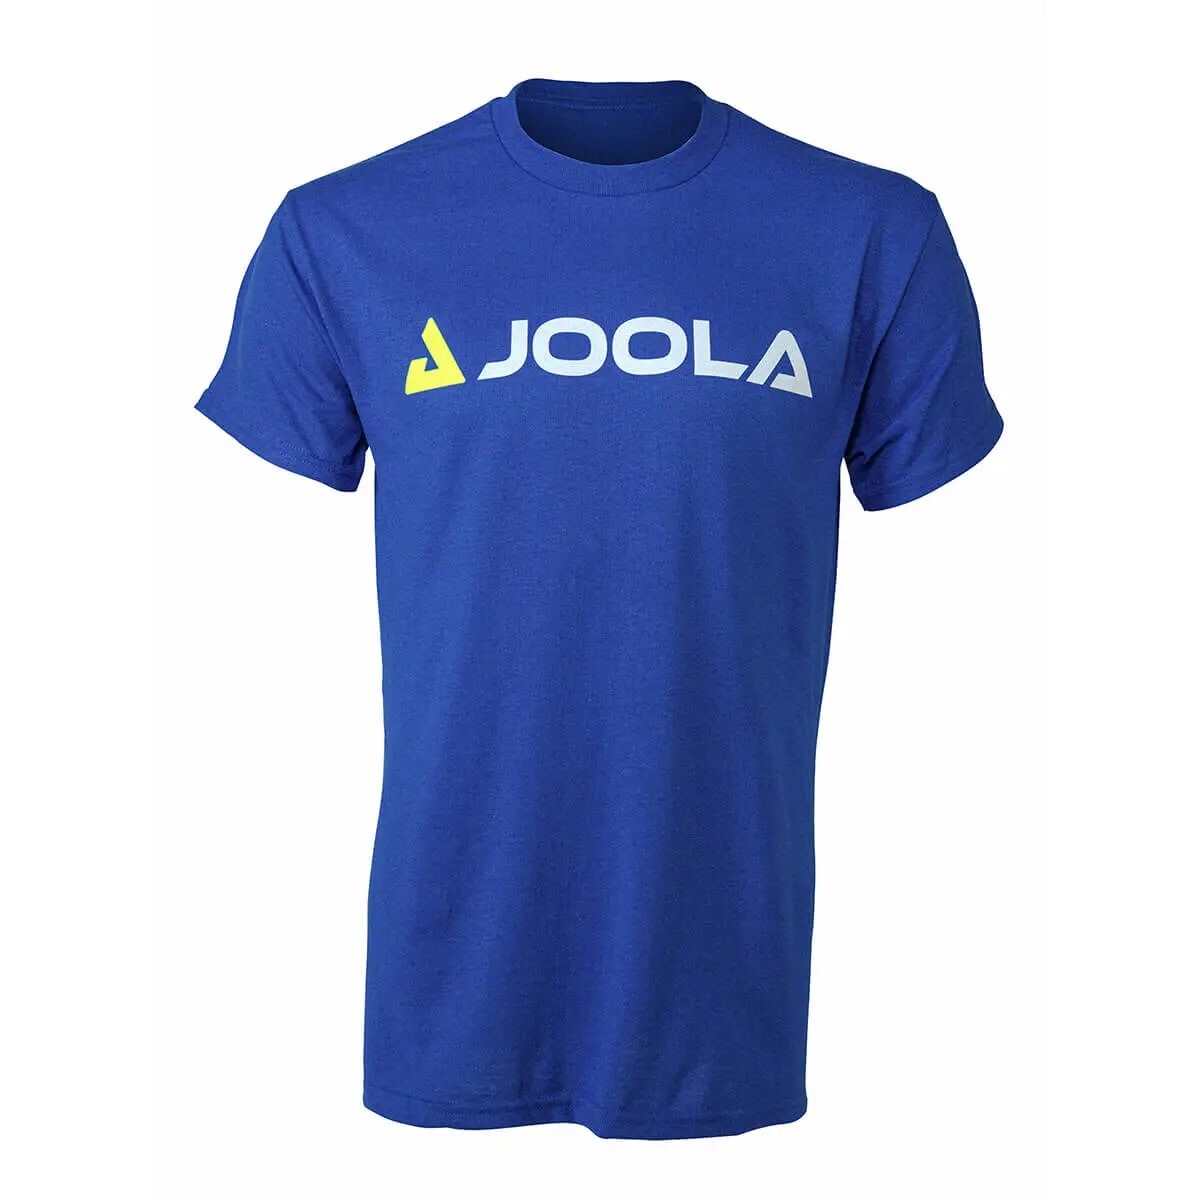 JOOLA Icon Shirt - Blue